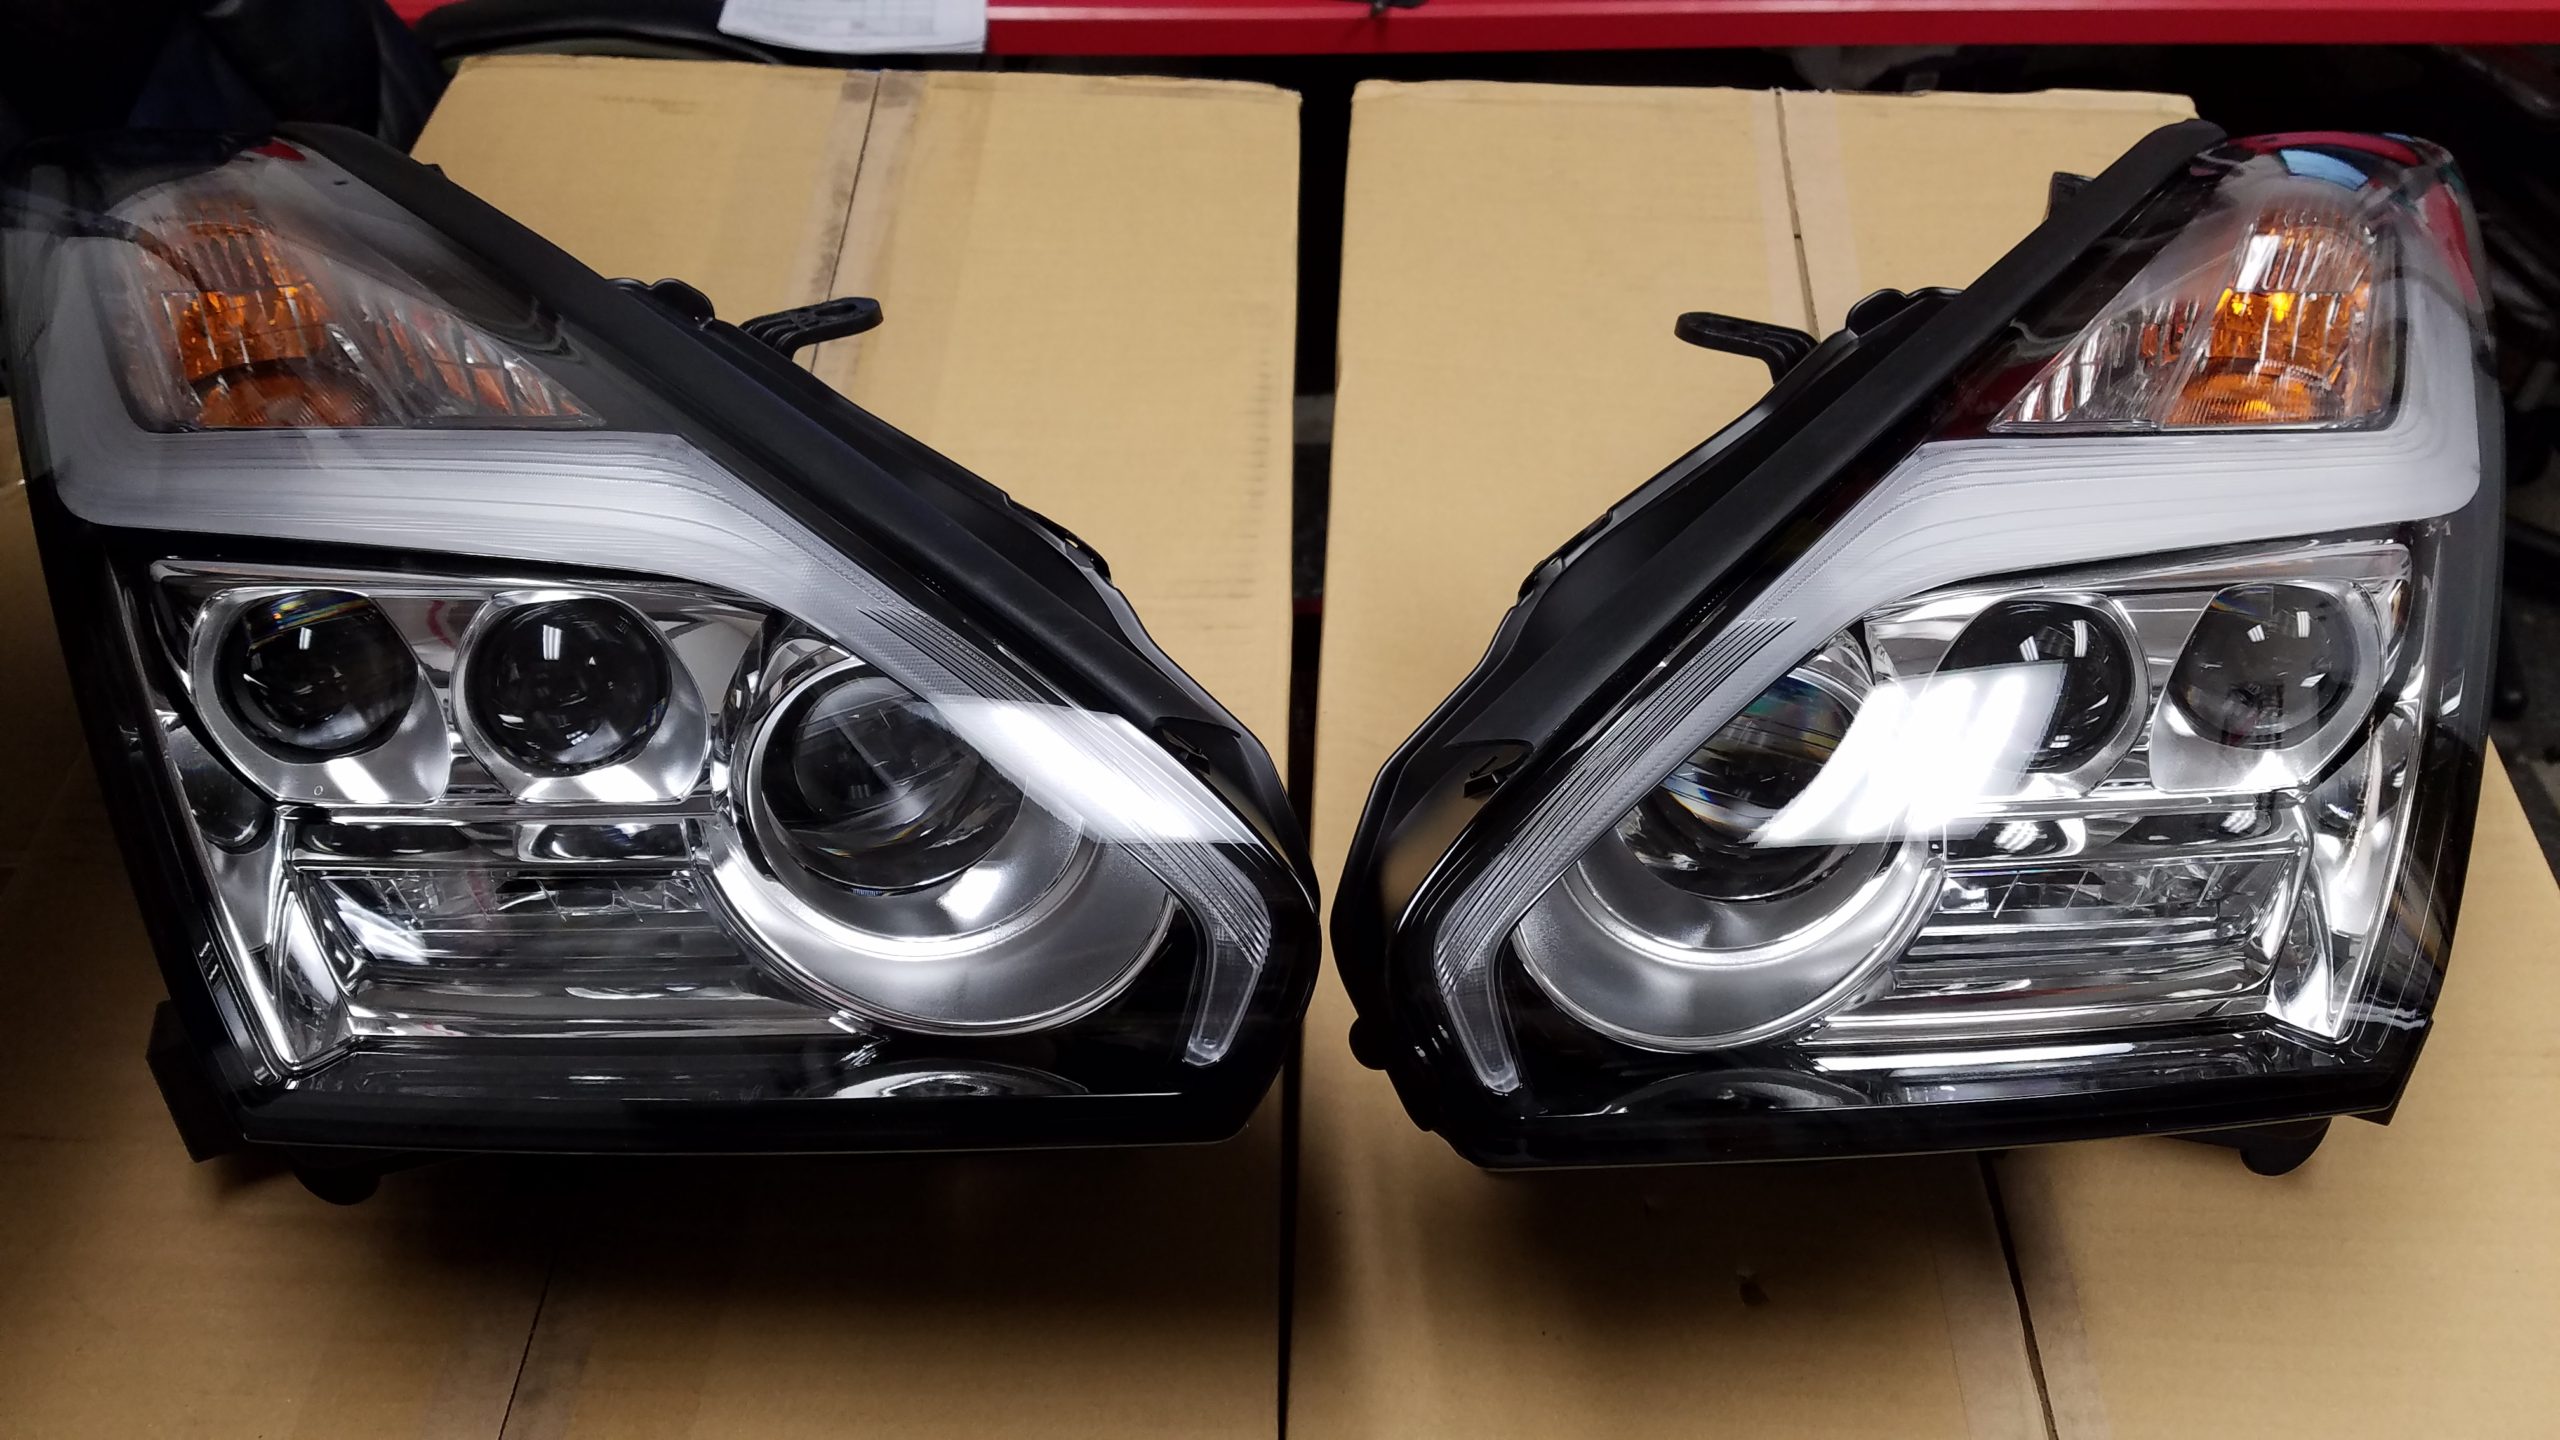 Sult imperium Leopard Headlights - 2017+ R35 GT-R - Genuine OEM Nissan